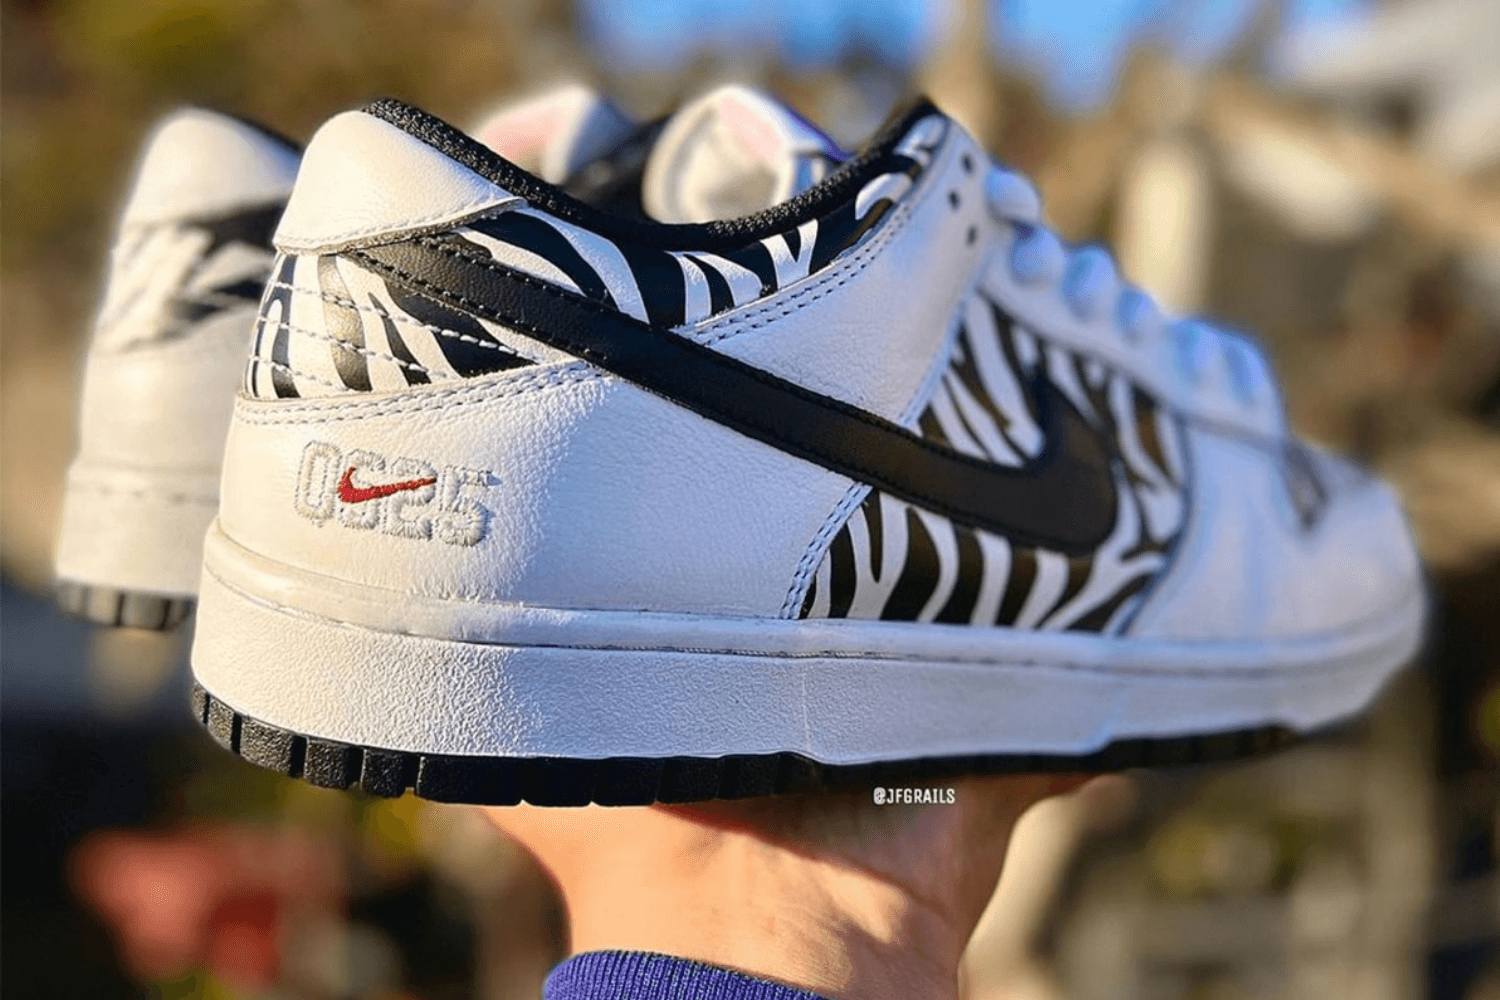 The Quartersnacks x Nike SB Dunk Low 'Reverse Zebra' release